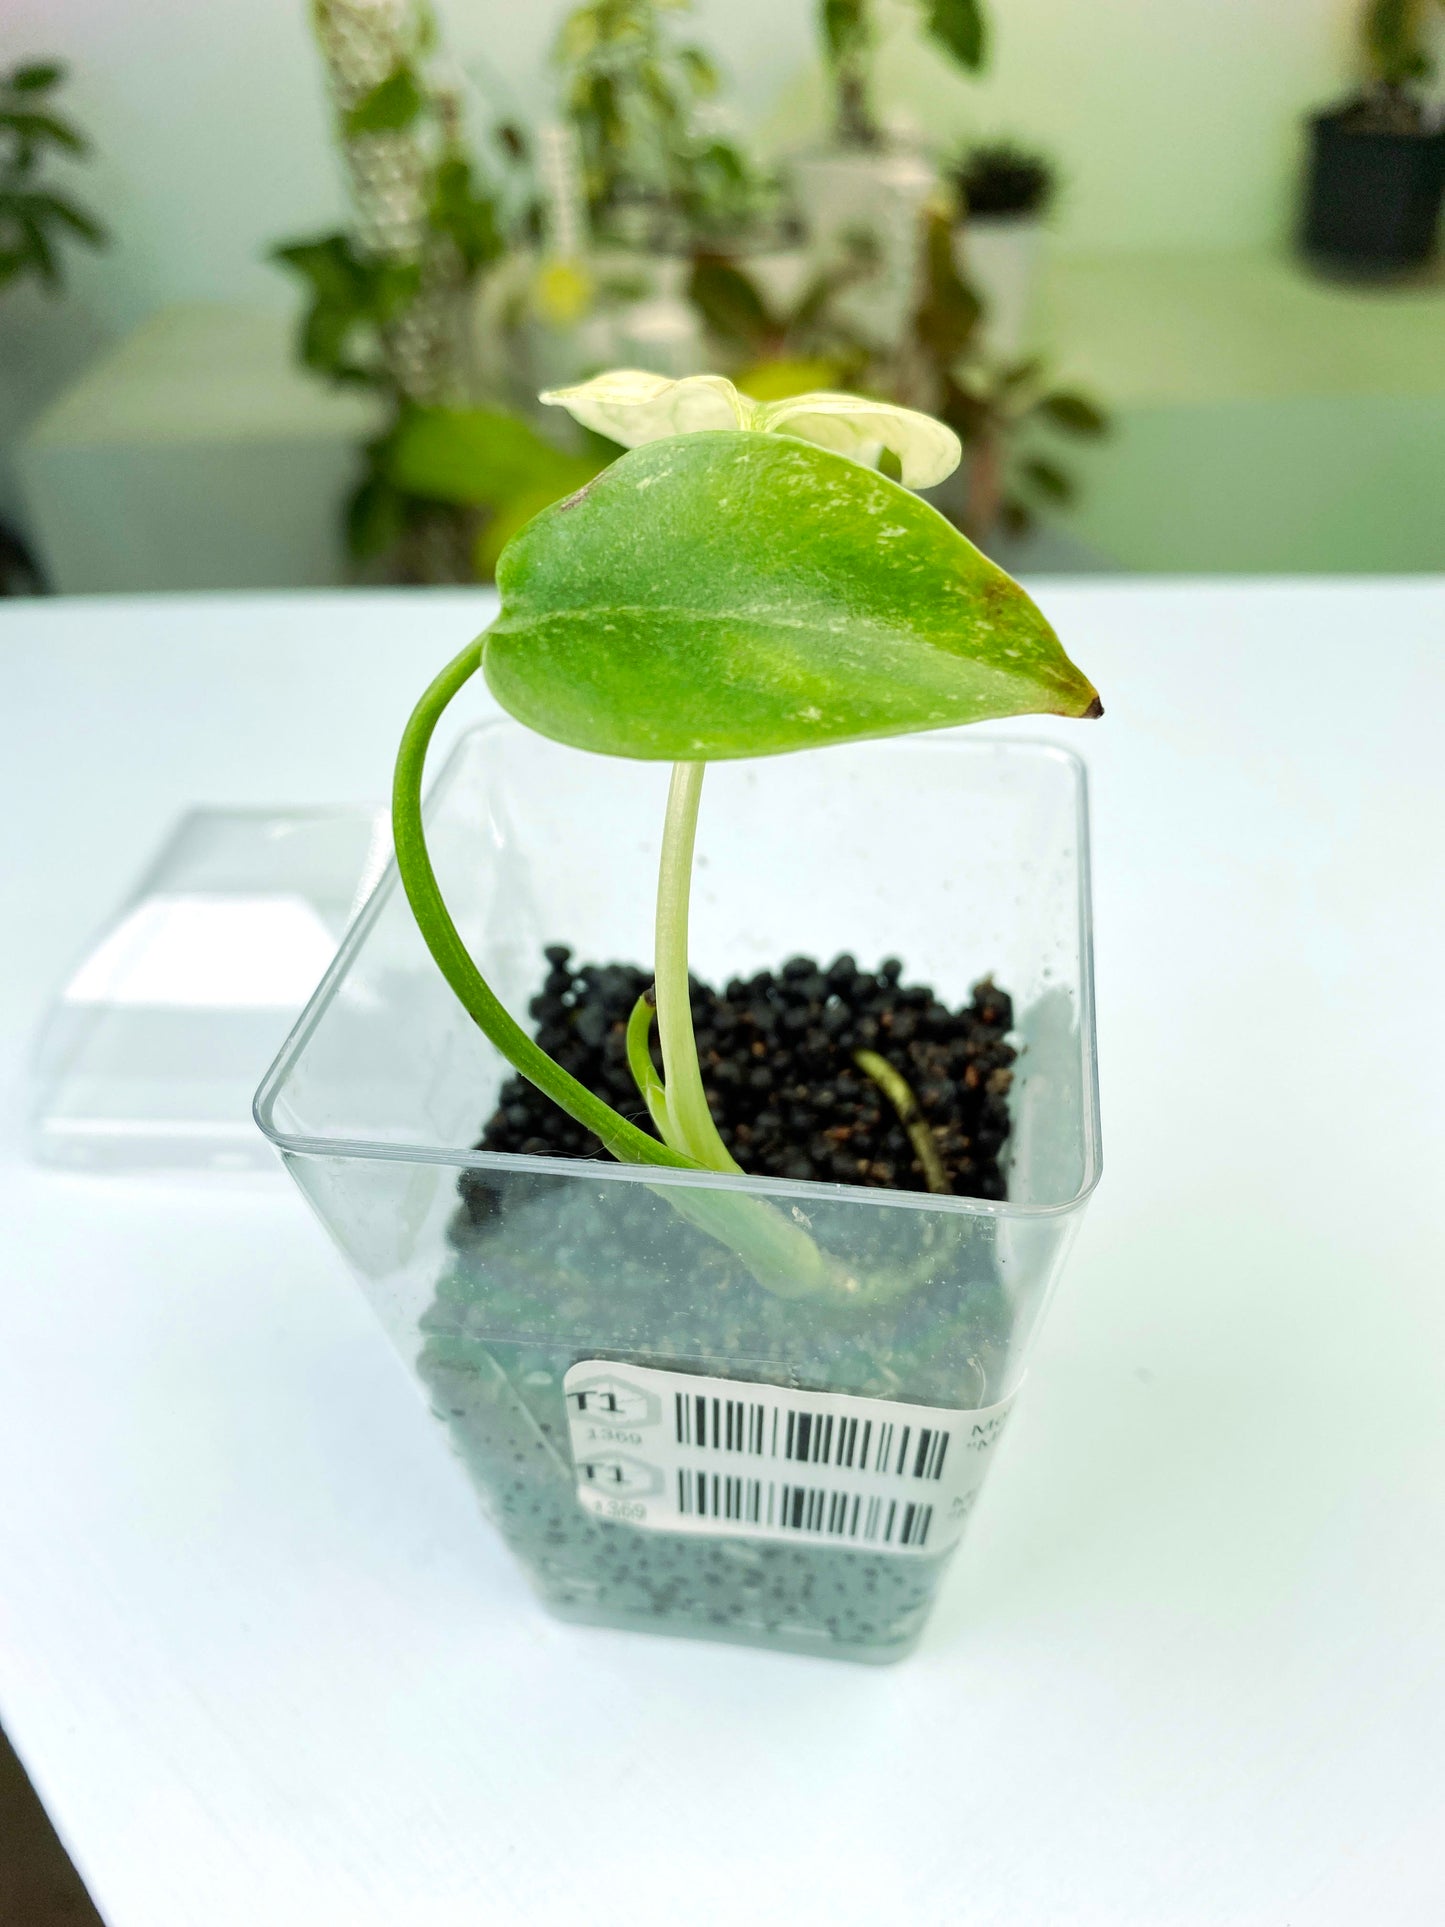 Monstera deliciosa "Mint" variegated (3:T1) [1369] | Rare Aroid | Exact Plant